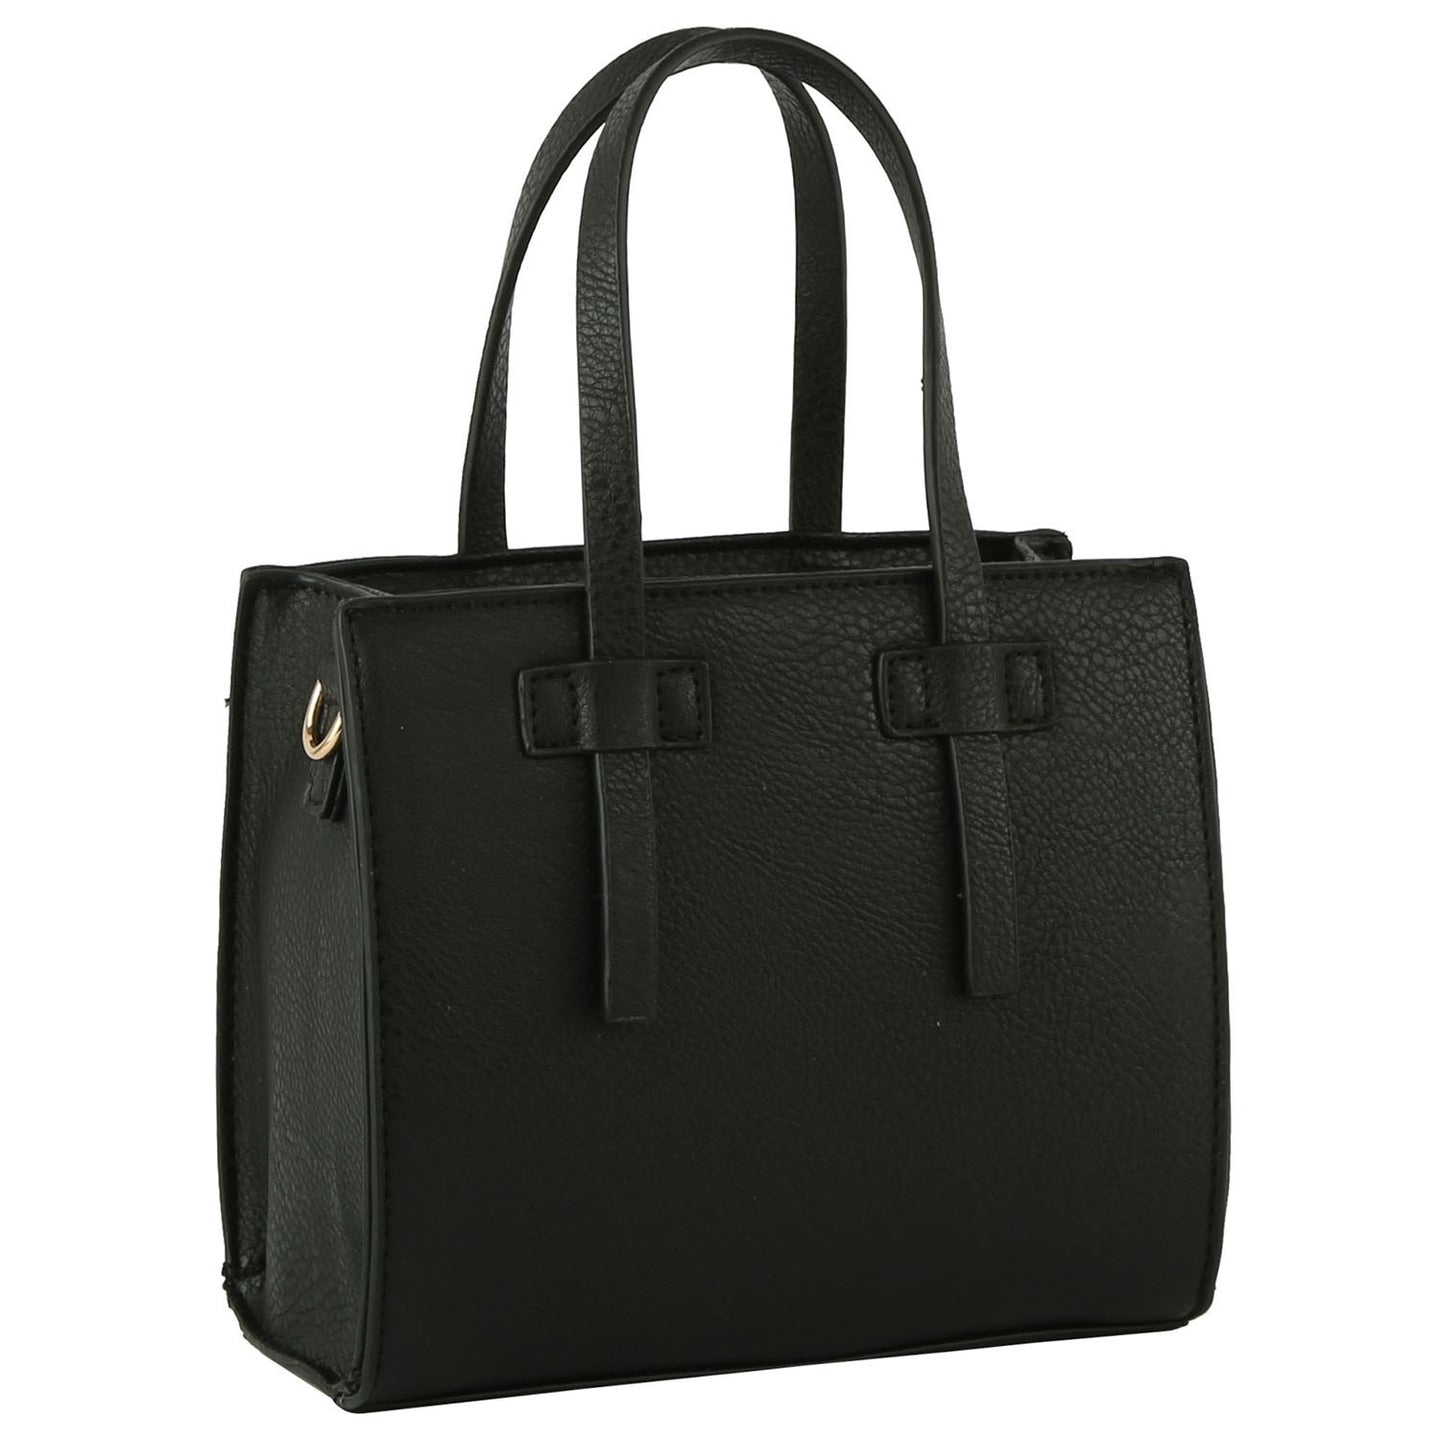 Black Boxy Satchel Handbag